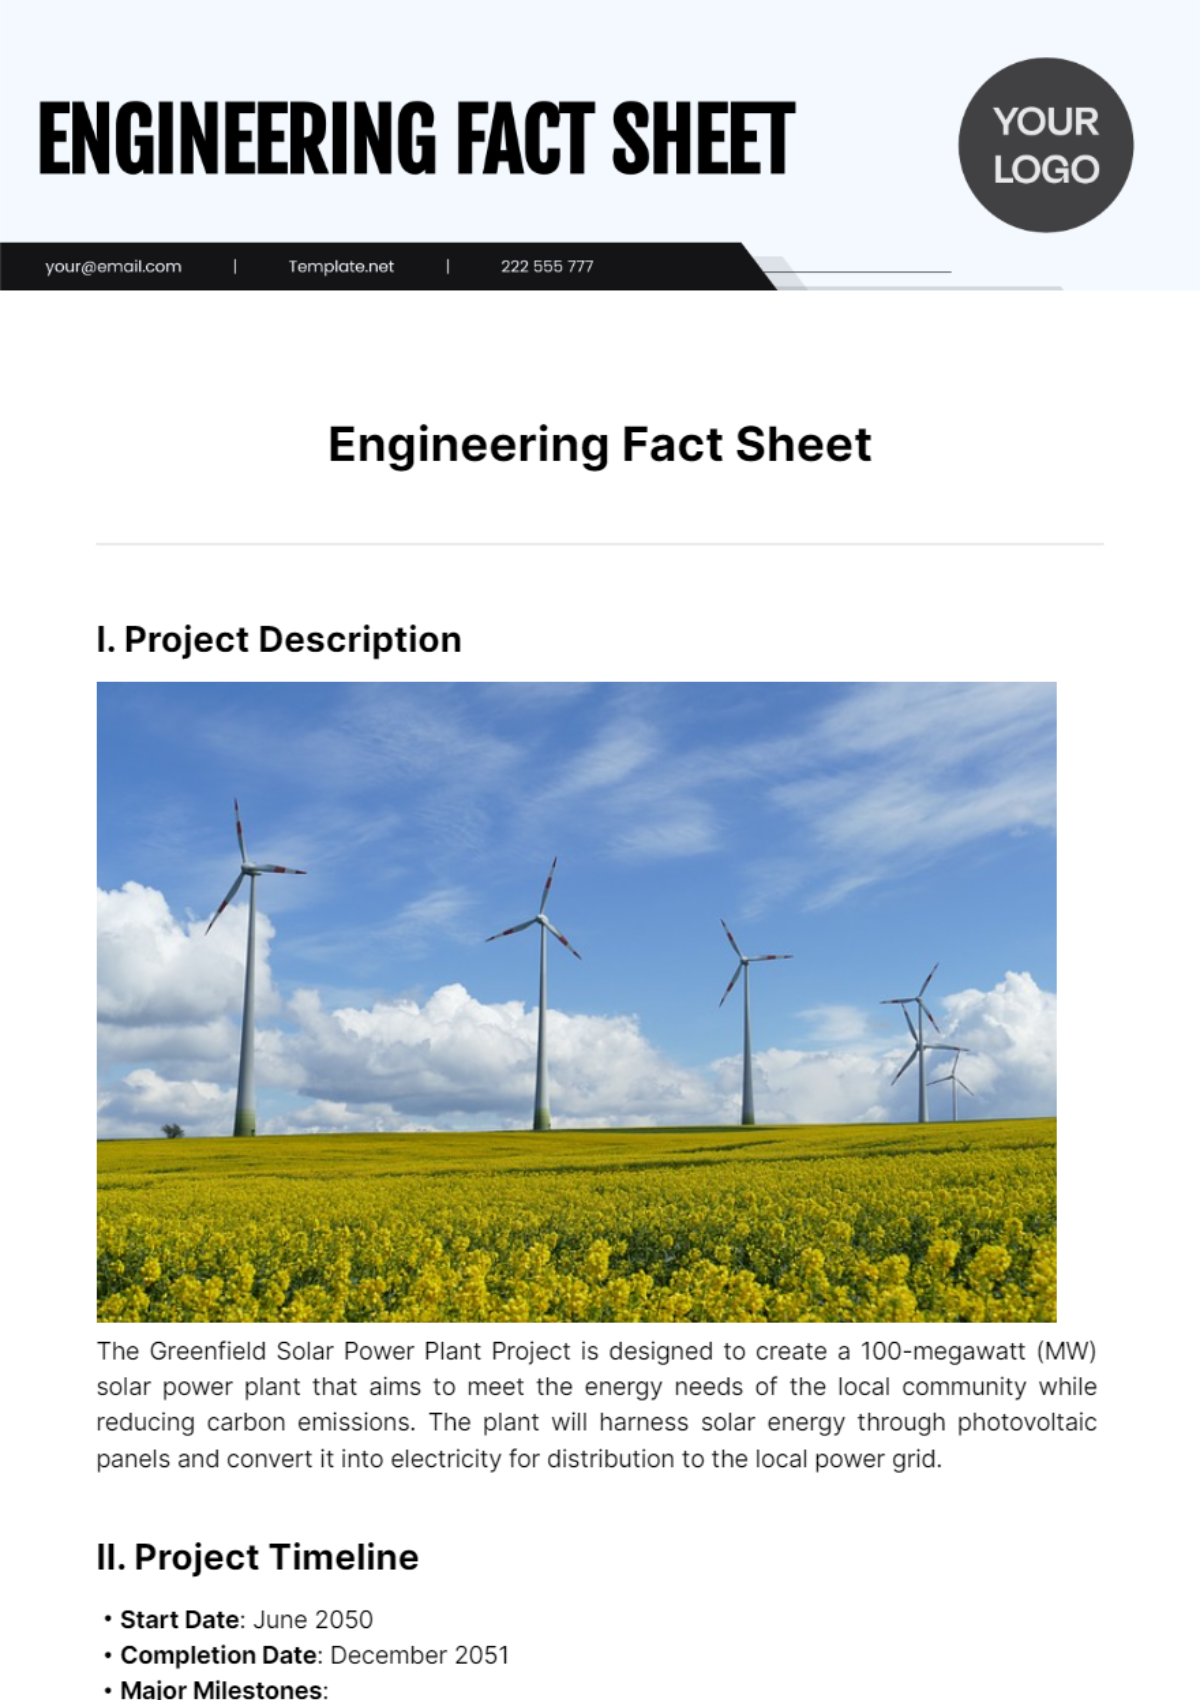 Engineering Fact Sheet Template